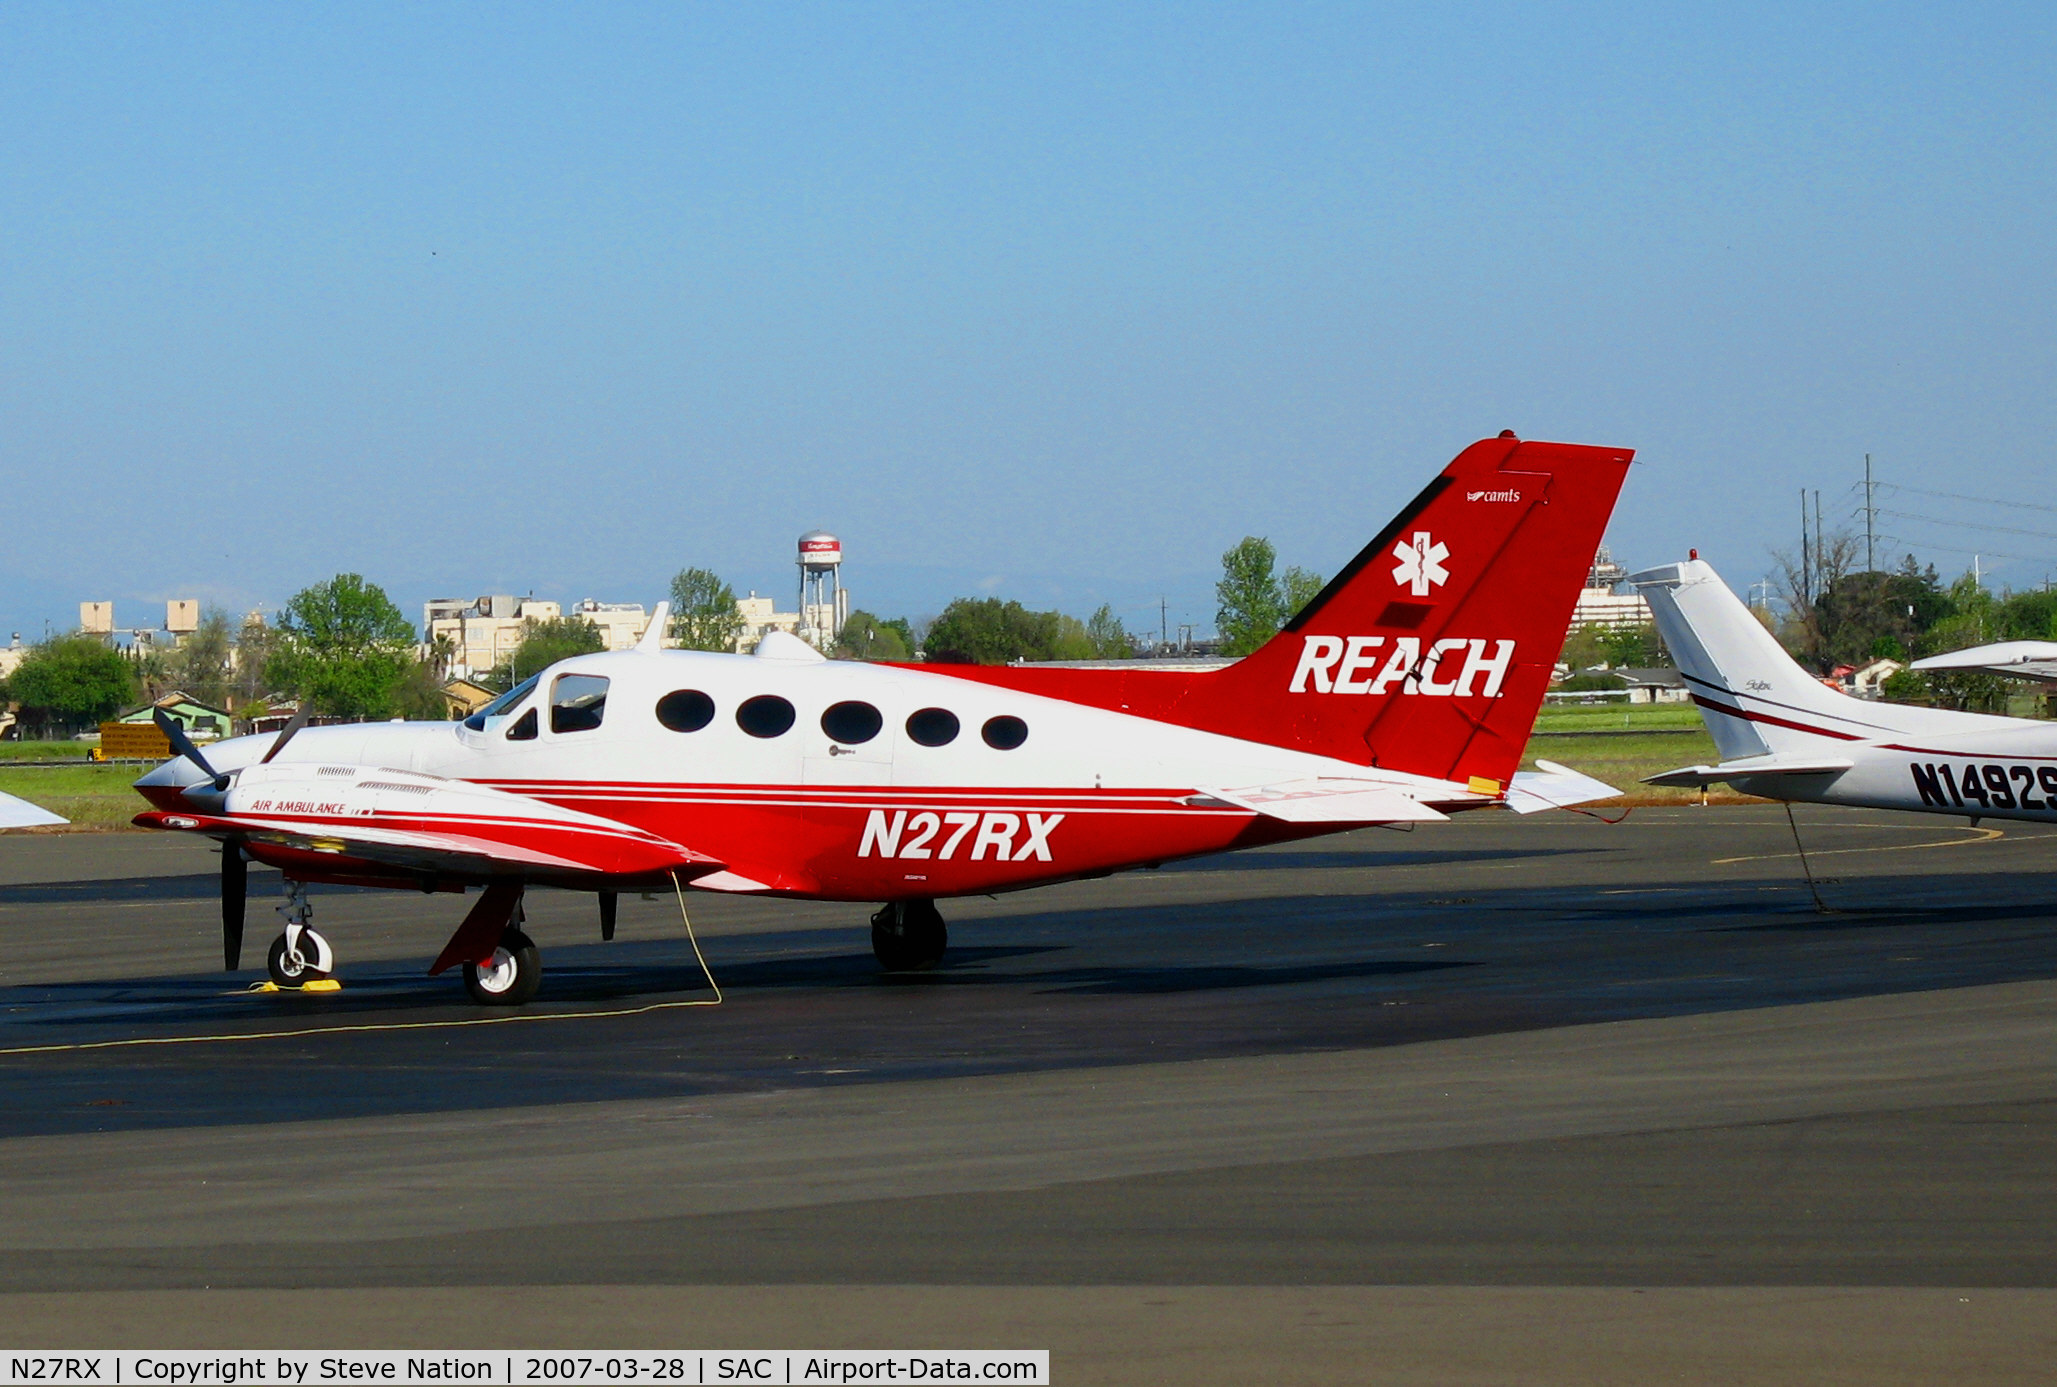 N27RX, 1977 Cessna 421C Golden Eagle C/N 421C0404, REACH 1977 Cessna 421 @ Sacramento Executive Airport, CA